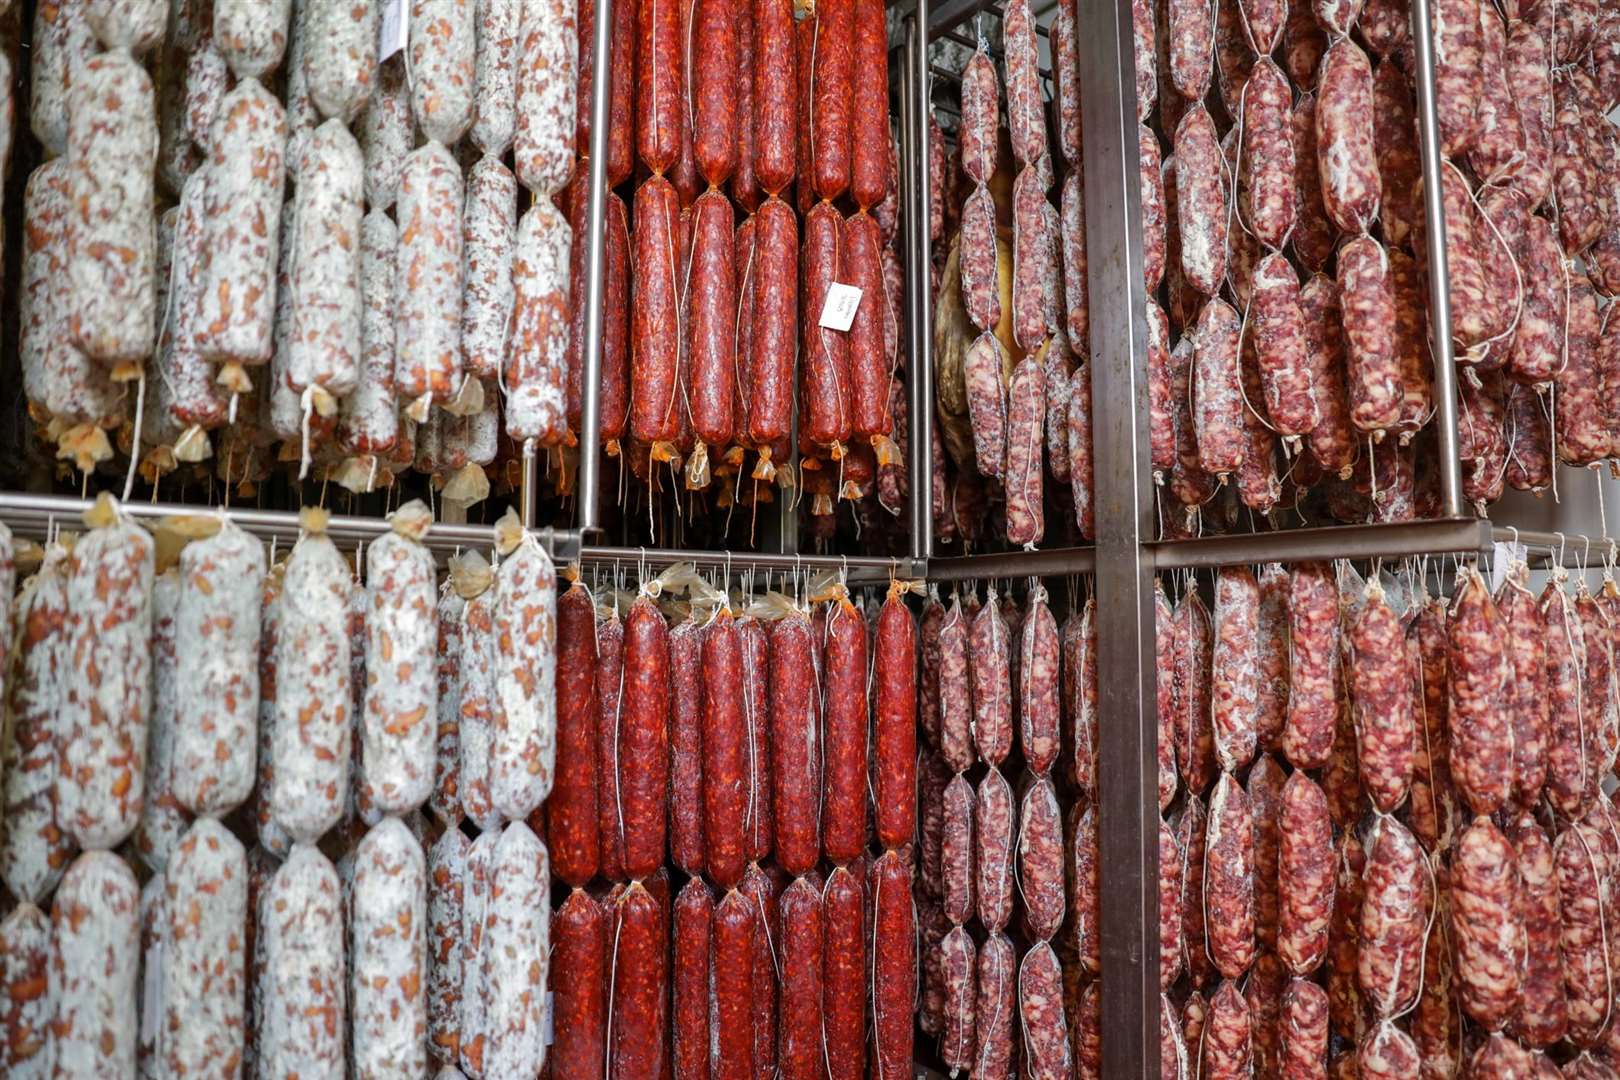 Lidl will stock Kentish meats (3789261)